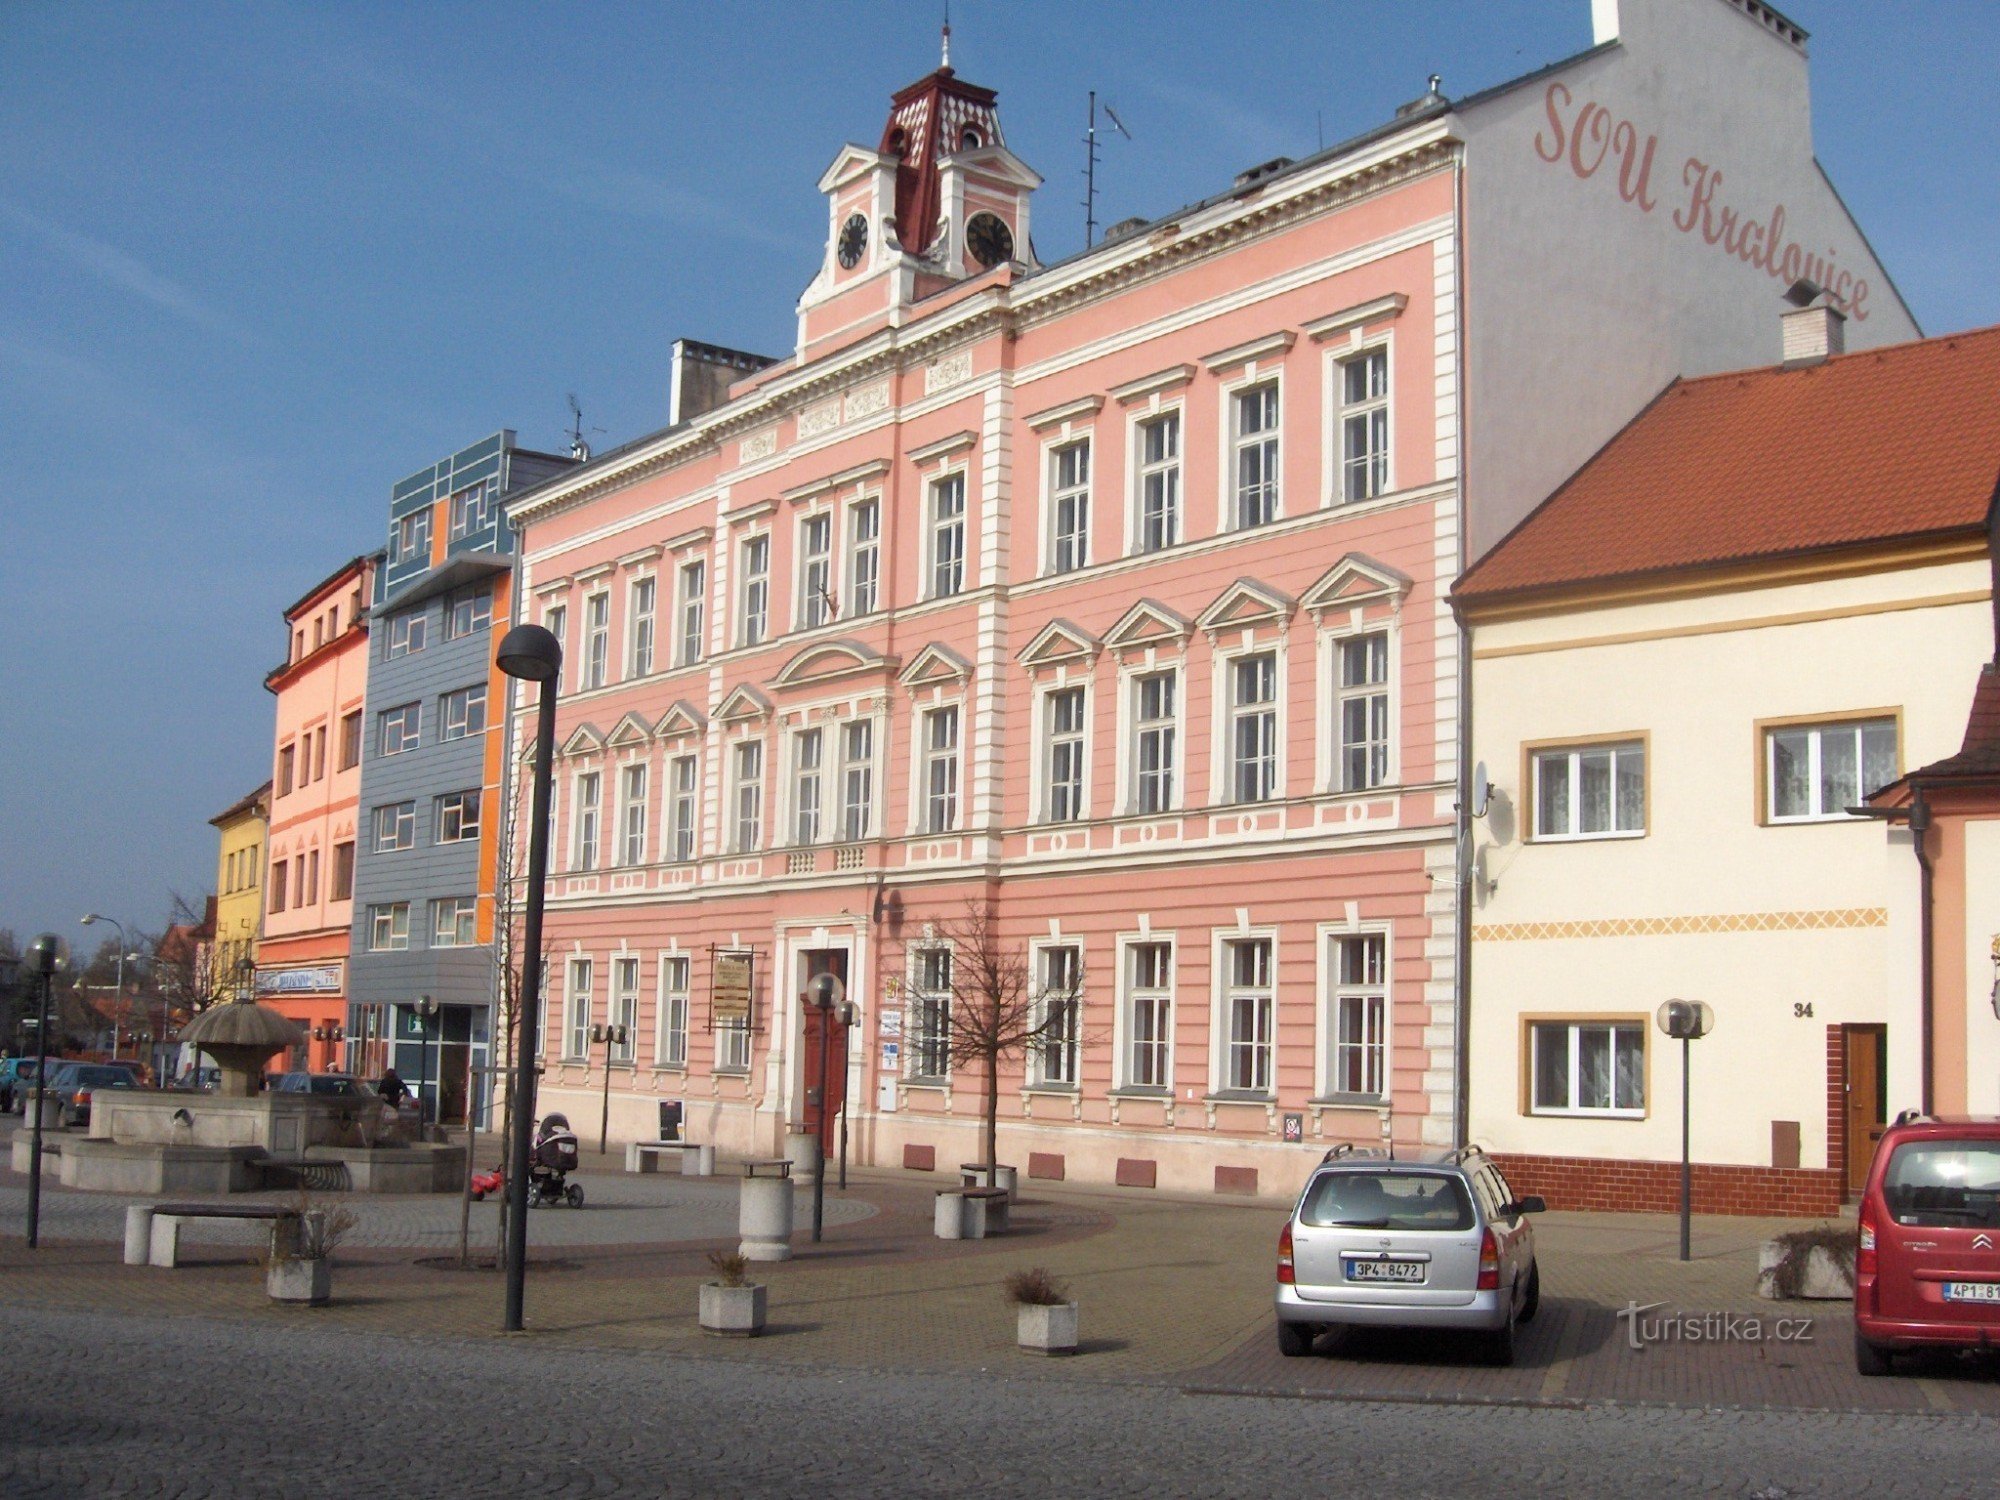 Kralovice square